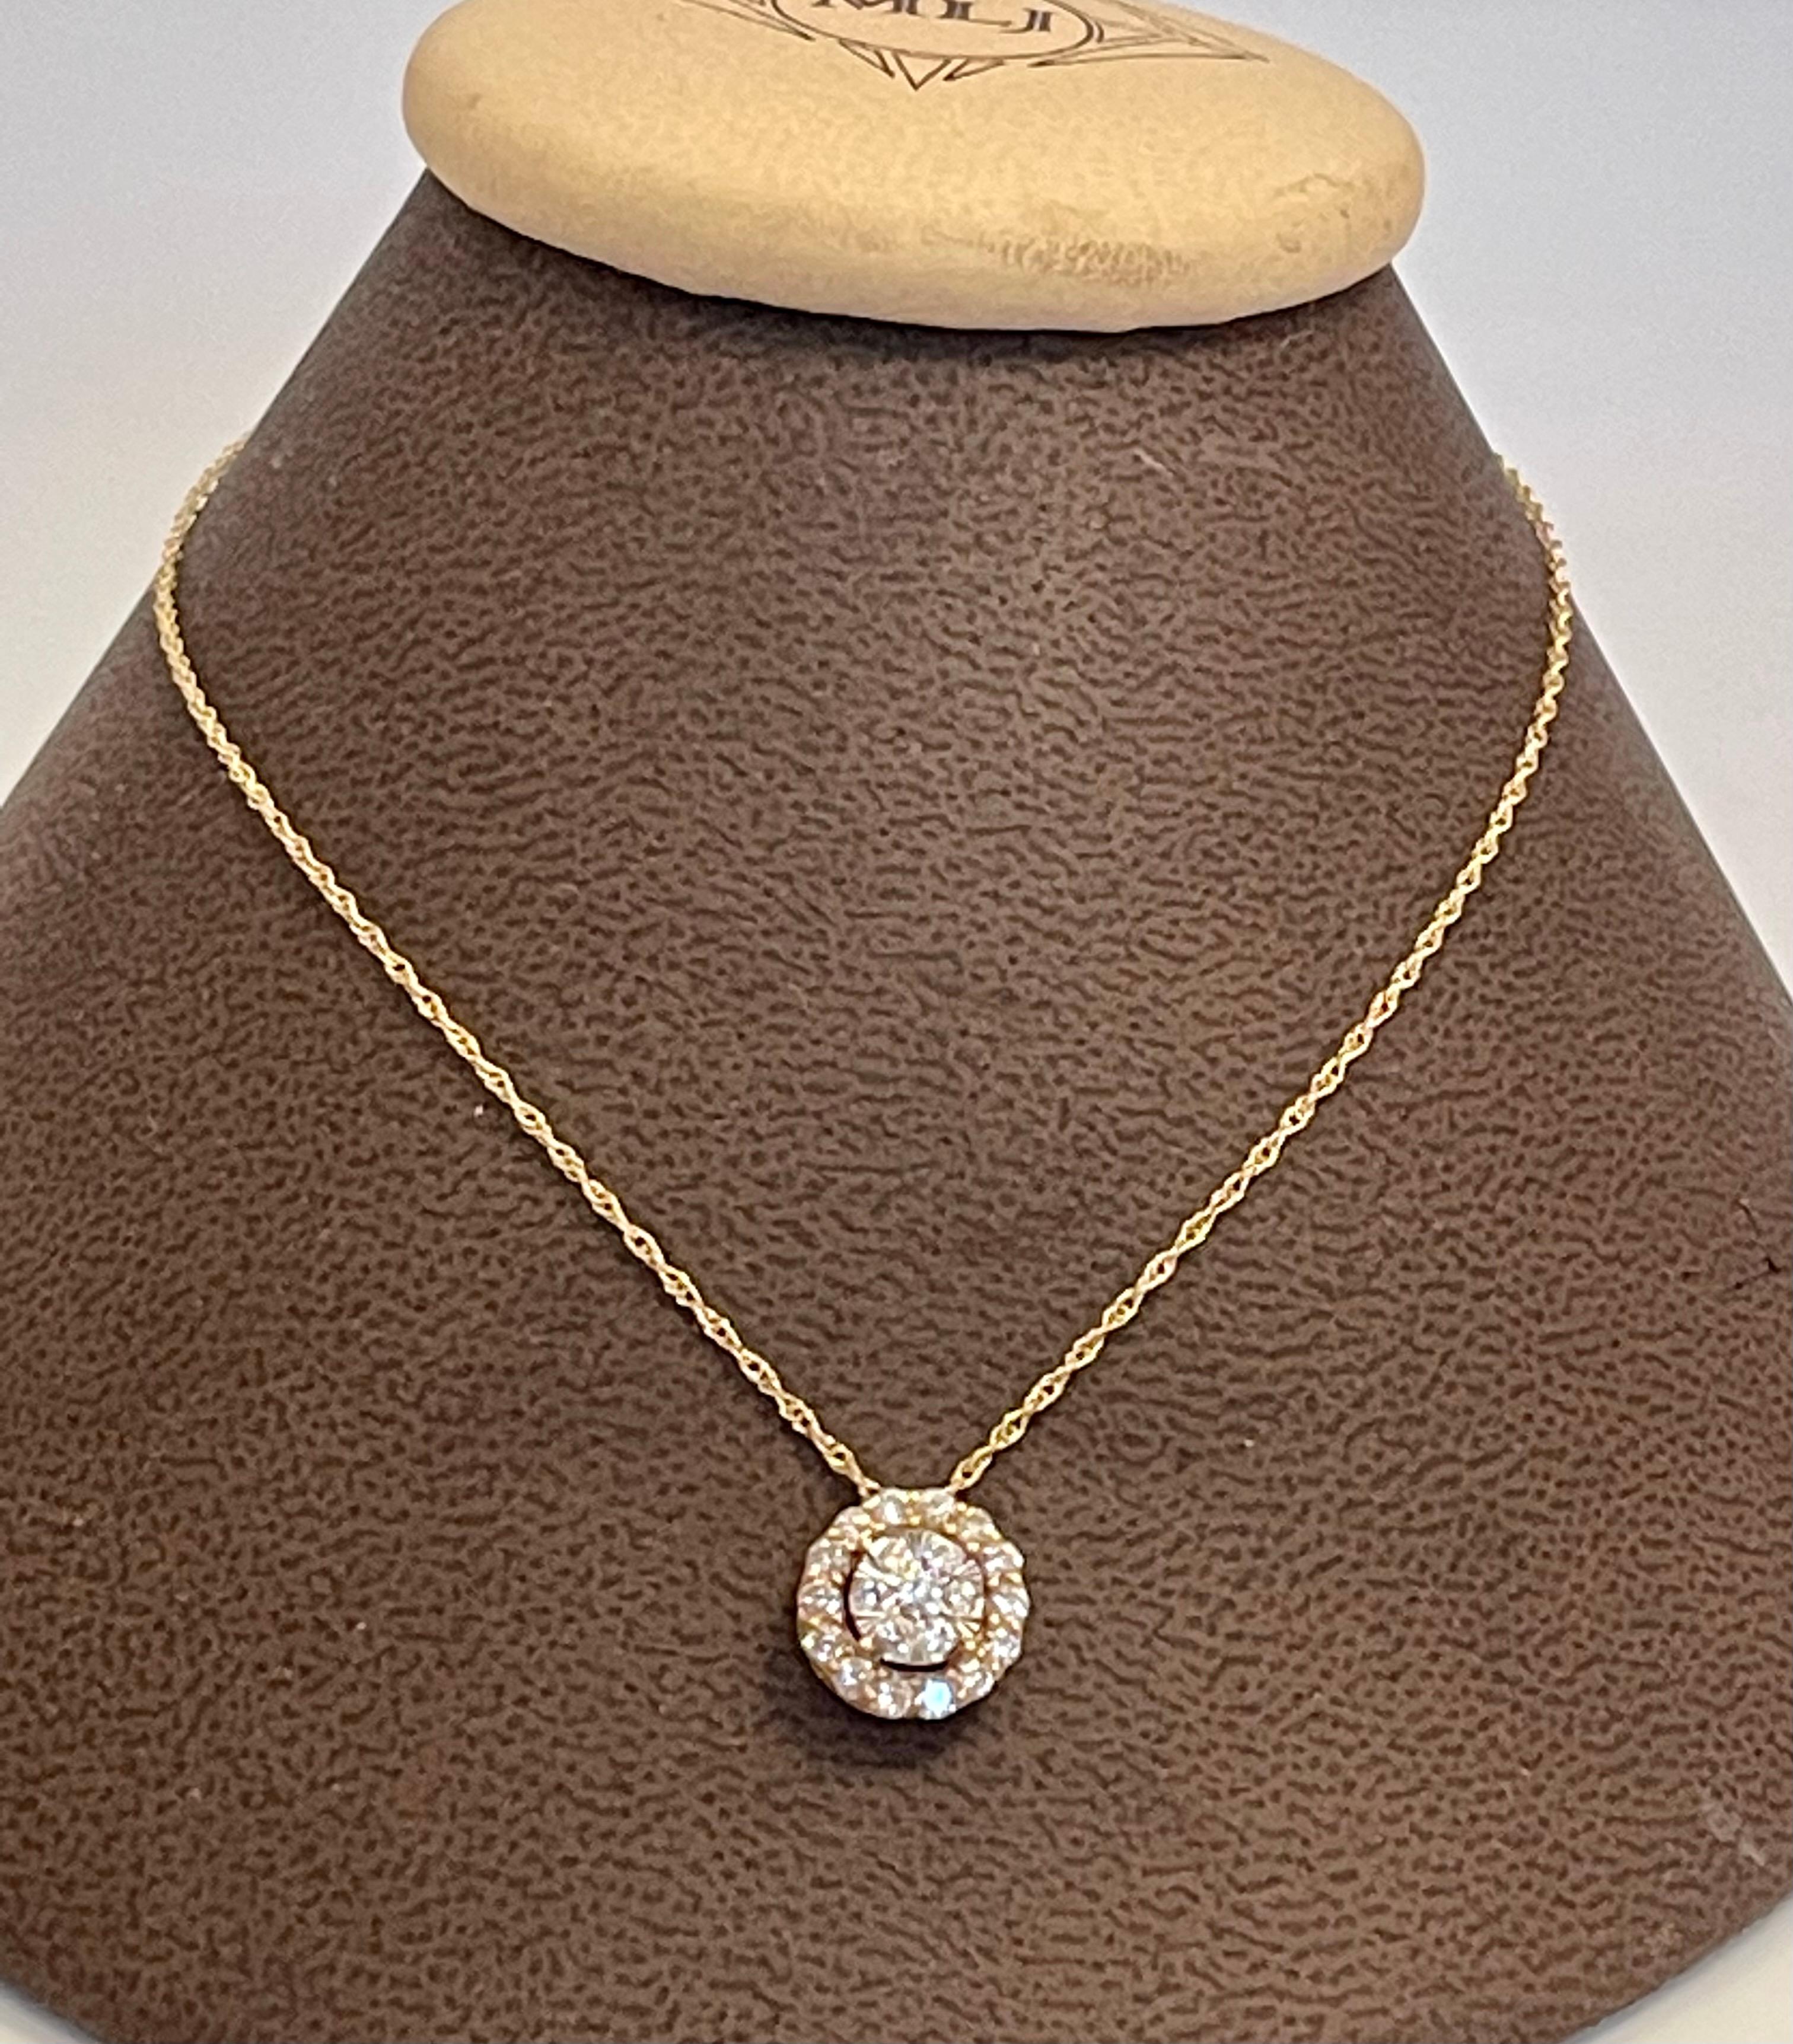 Women's 1 Carat Diamond Flower Pendant/ Necklace 14 Karat Yellow Gold with Chain